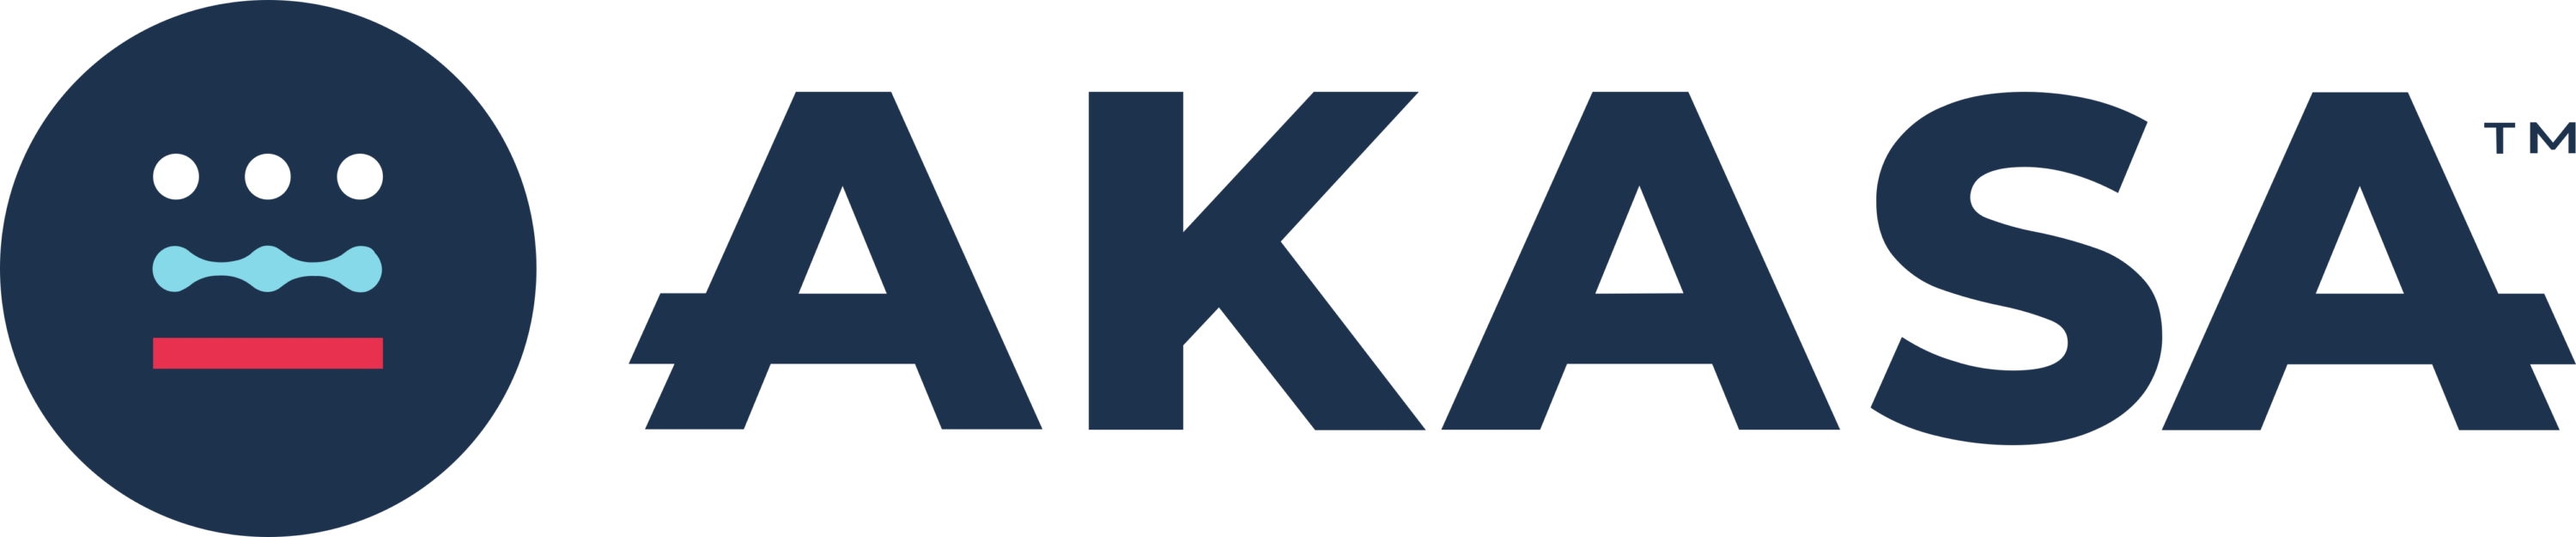 Akasa Logo